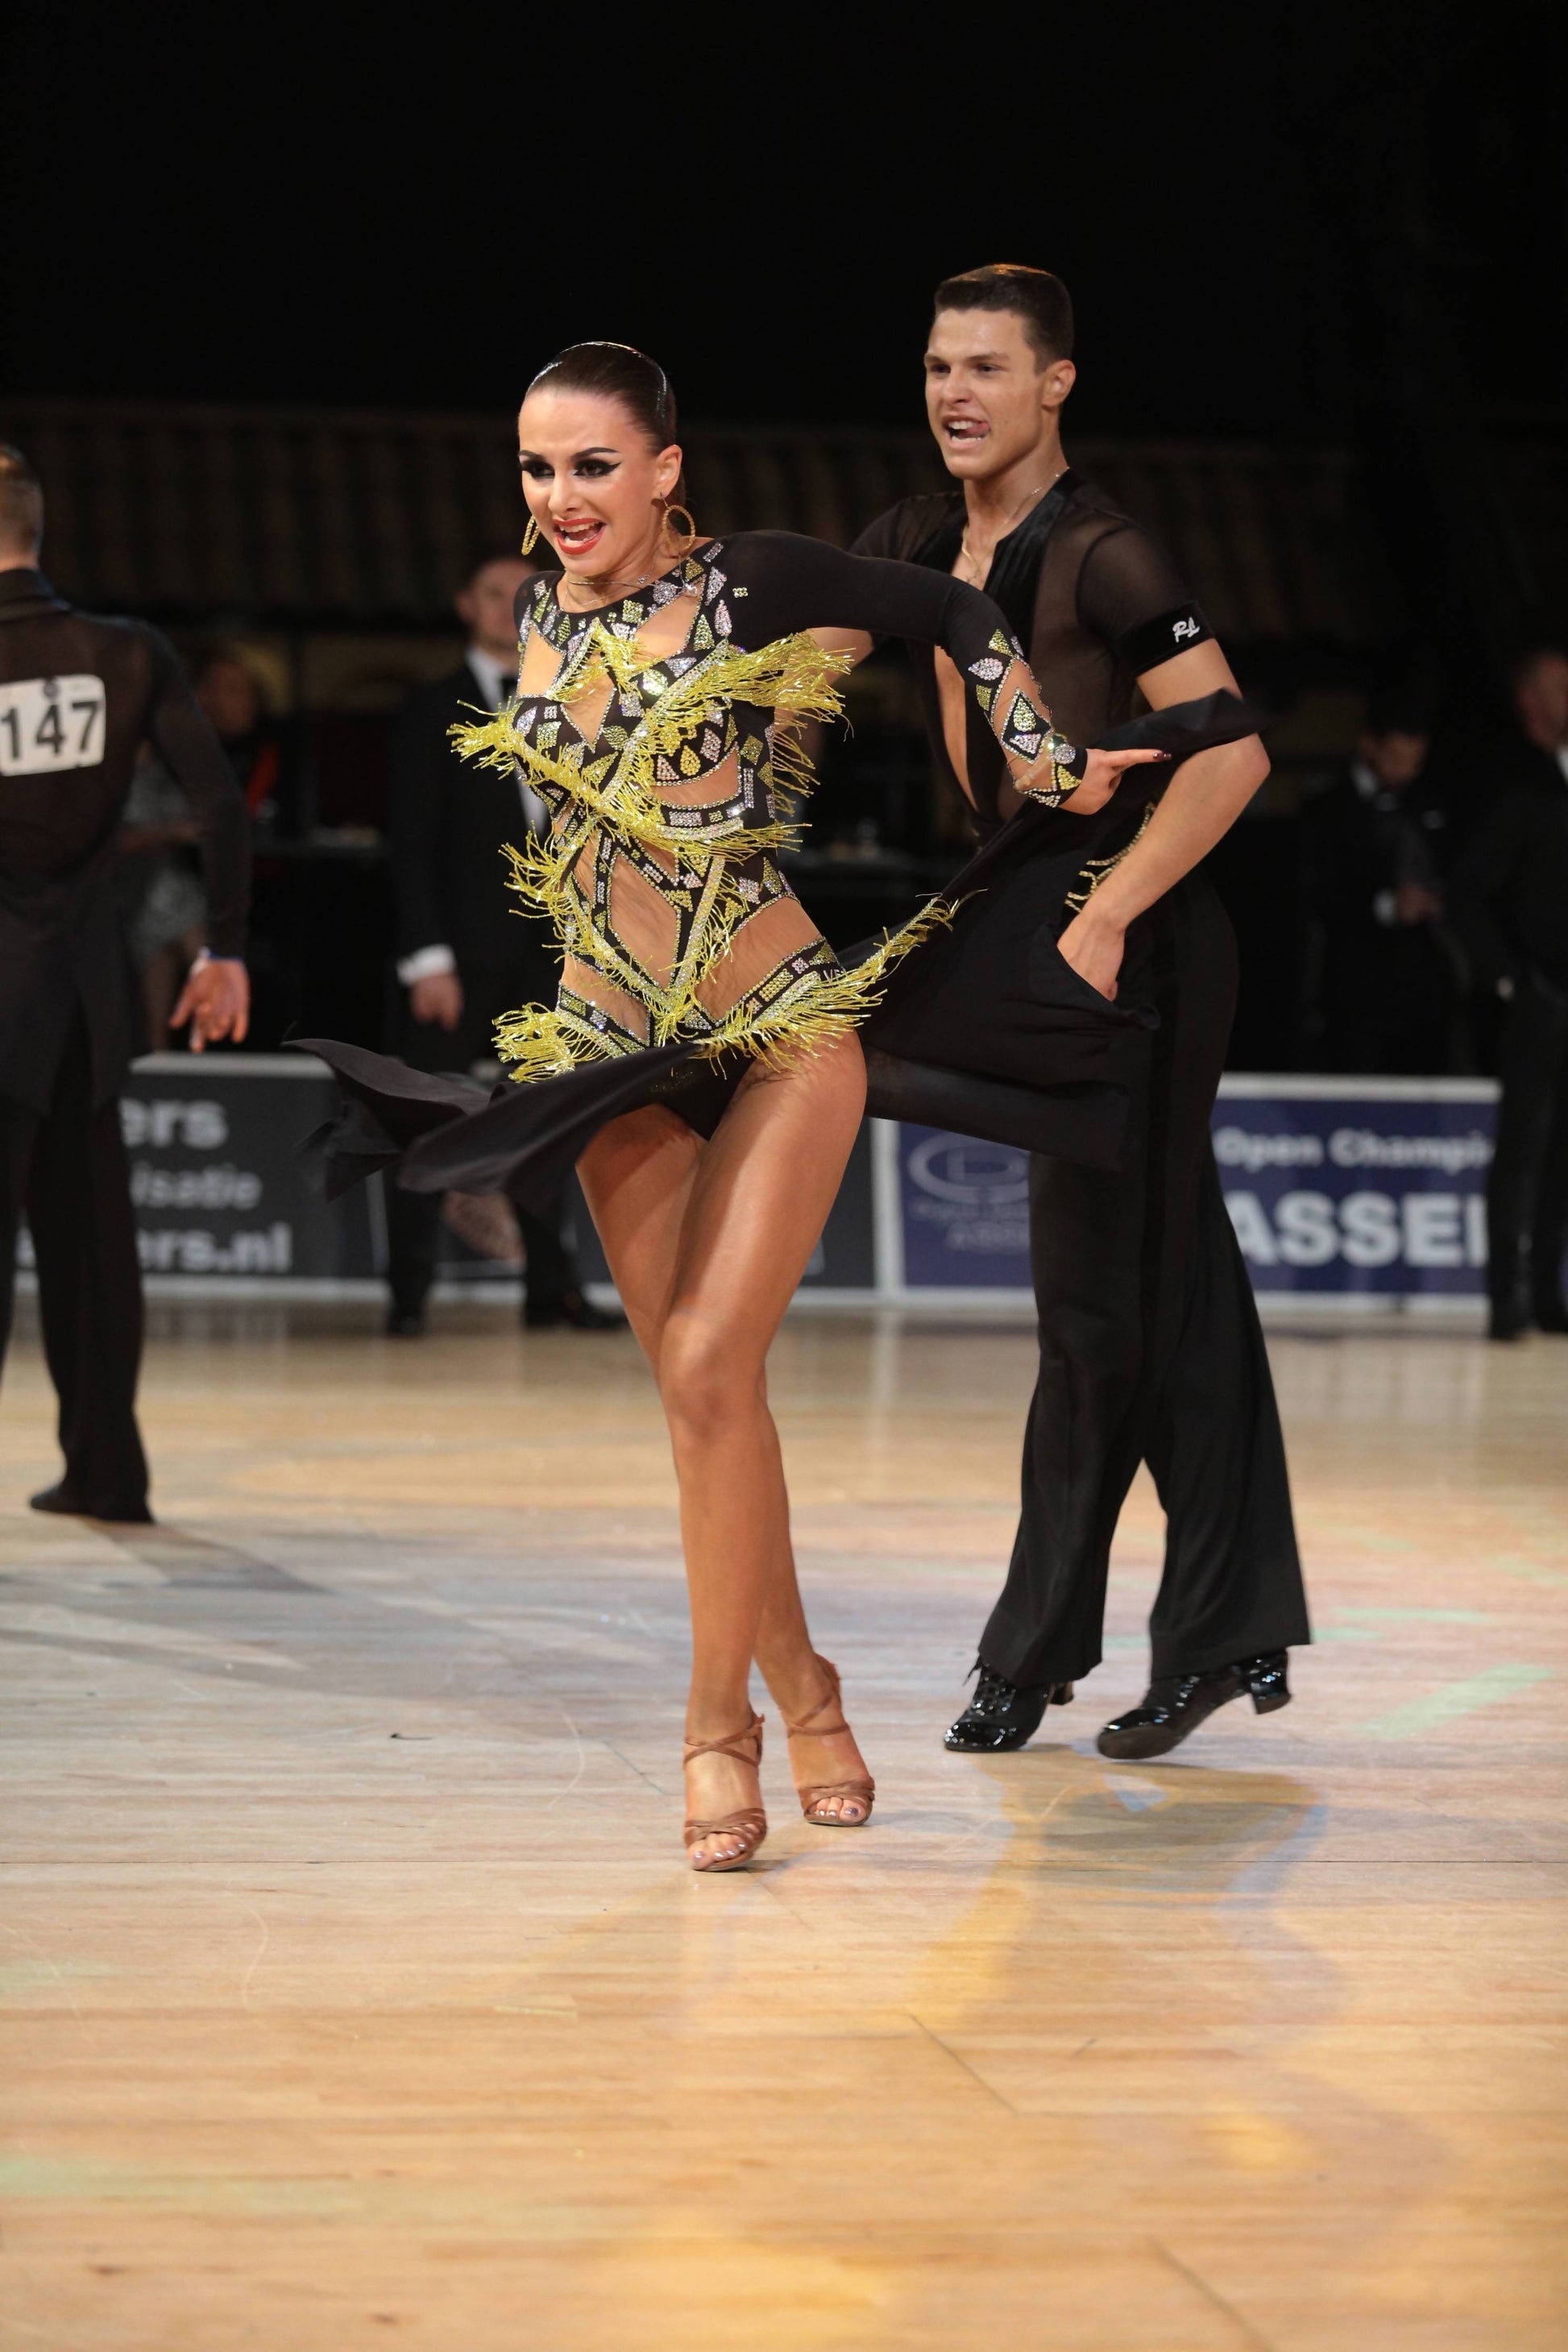 Sponsored Black & Gold Vesa Latin Dress (ballroom dresses for sale, latin, dancesport, rhythm)